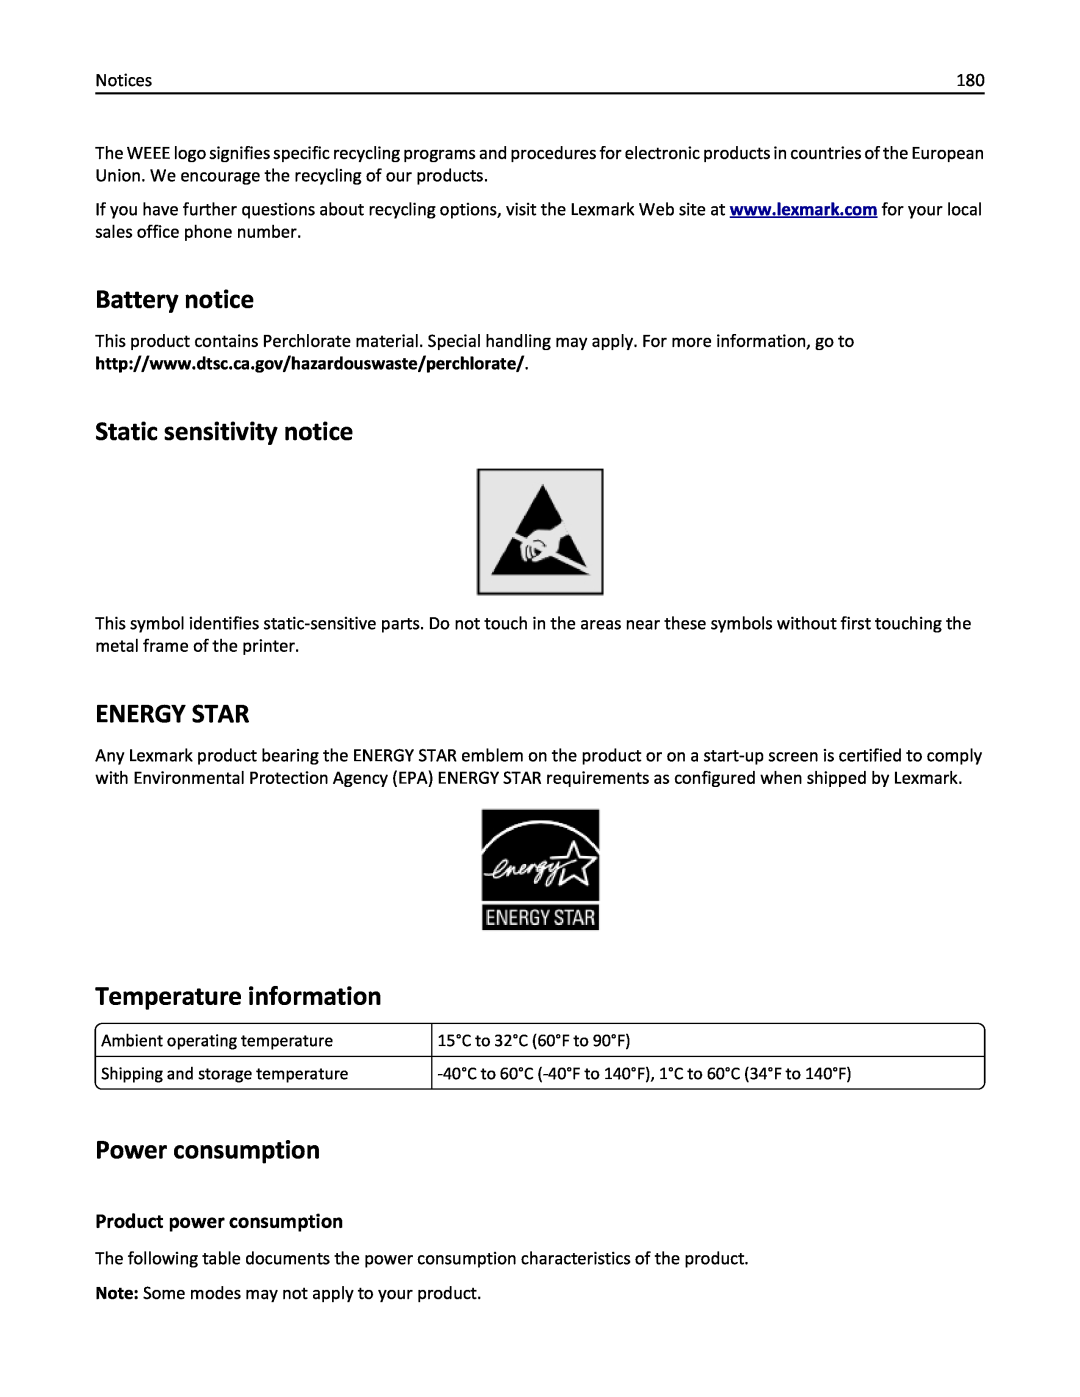 Lexmark 20E, 200 manual Battery notice, Static sensitivity notice, Energy Star, Temperature information, Power consumption 